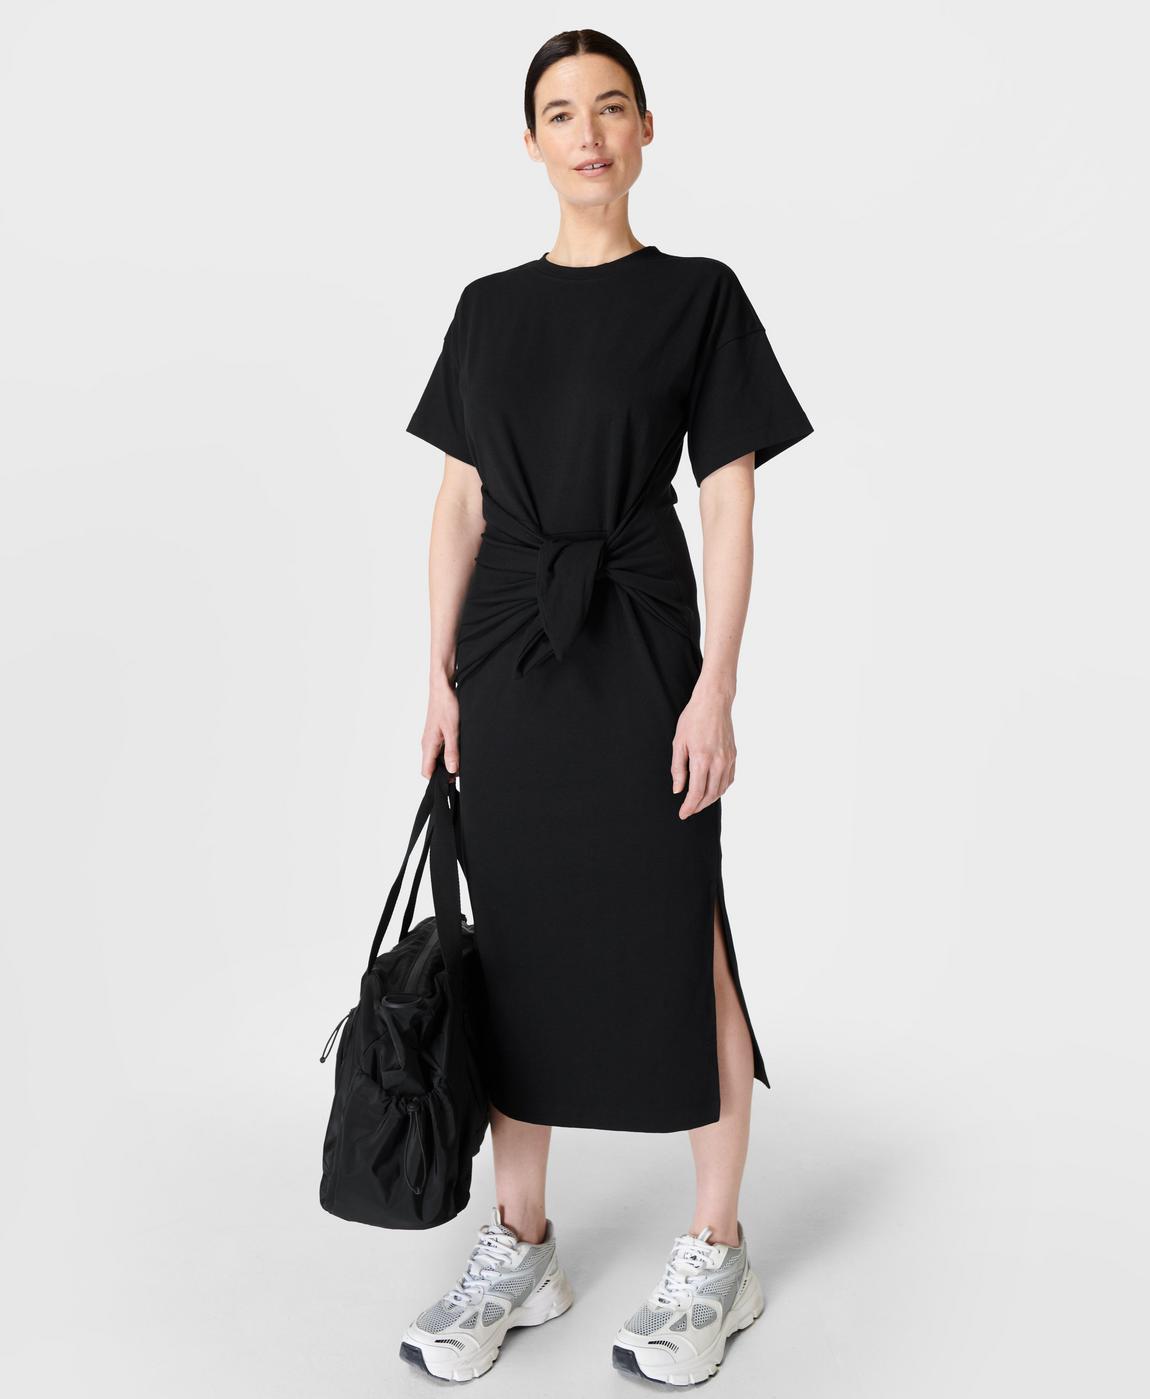 Knot Front Midi Dress - Black  Women's Dresses and Jumpsuits